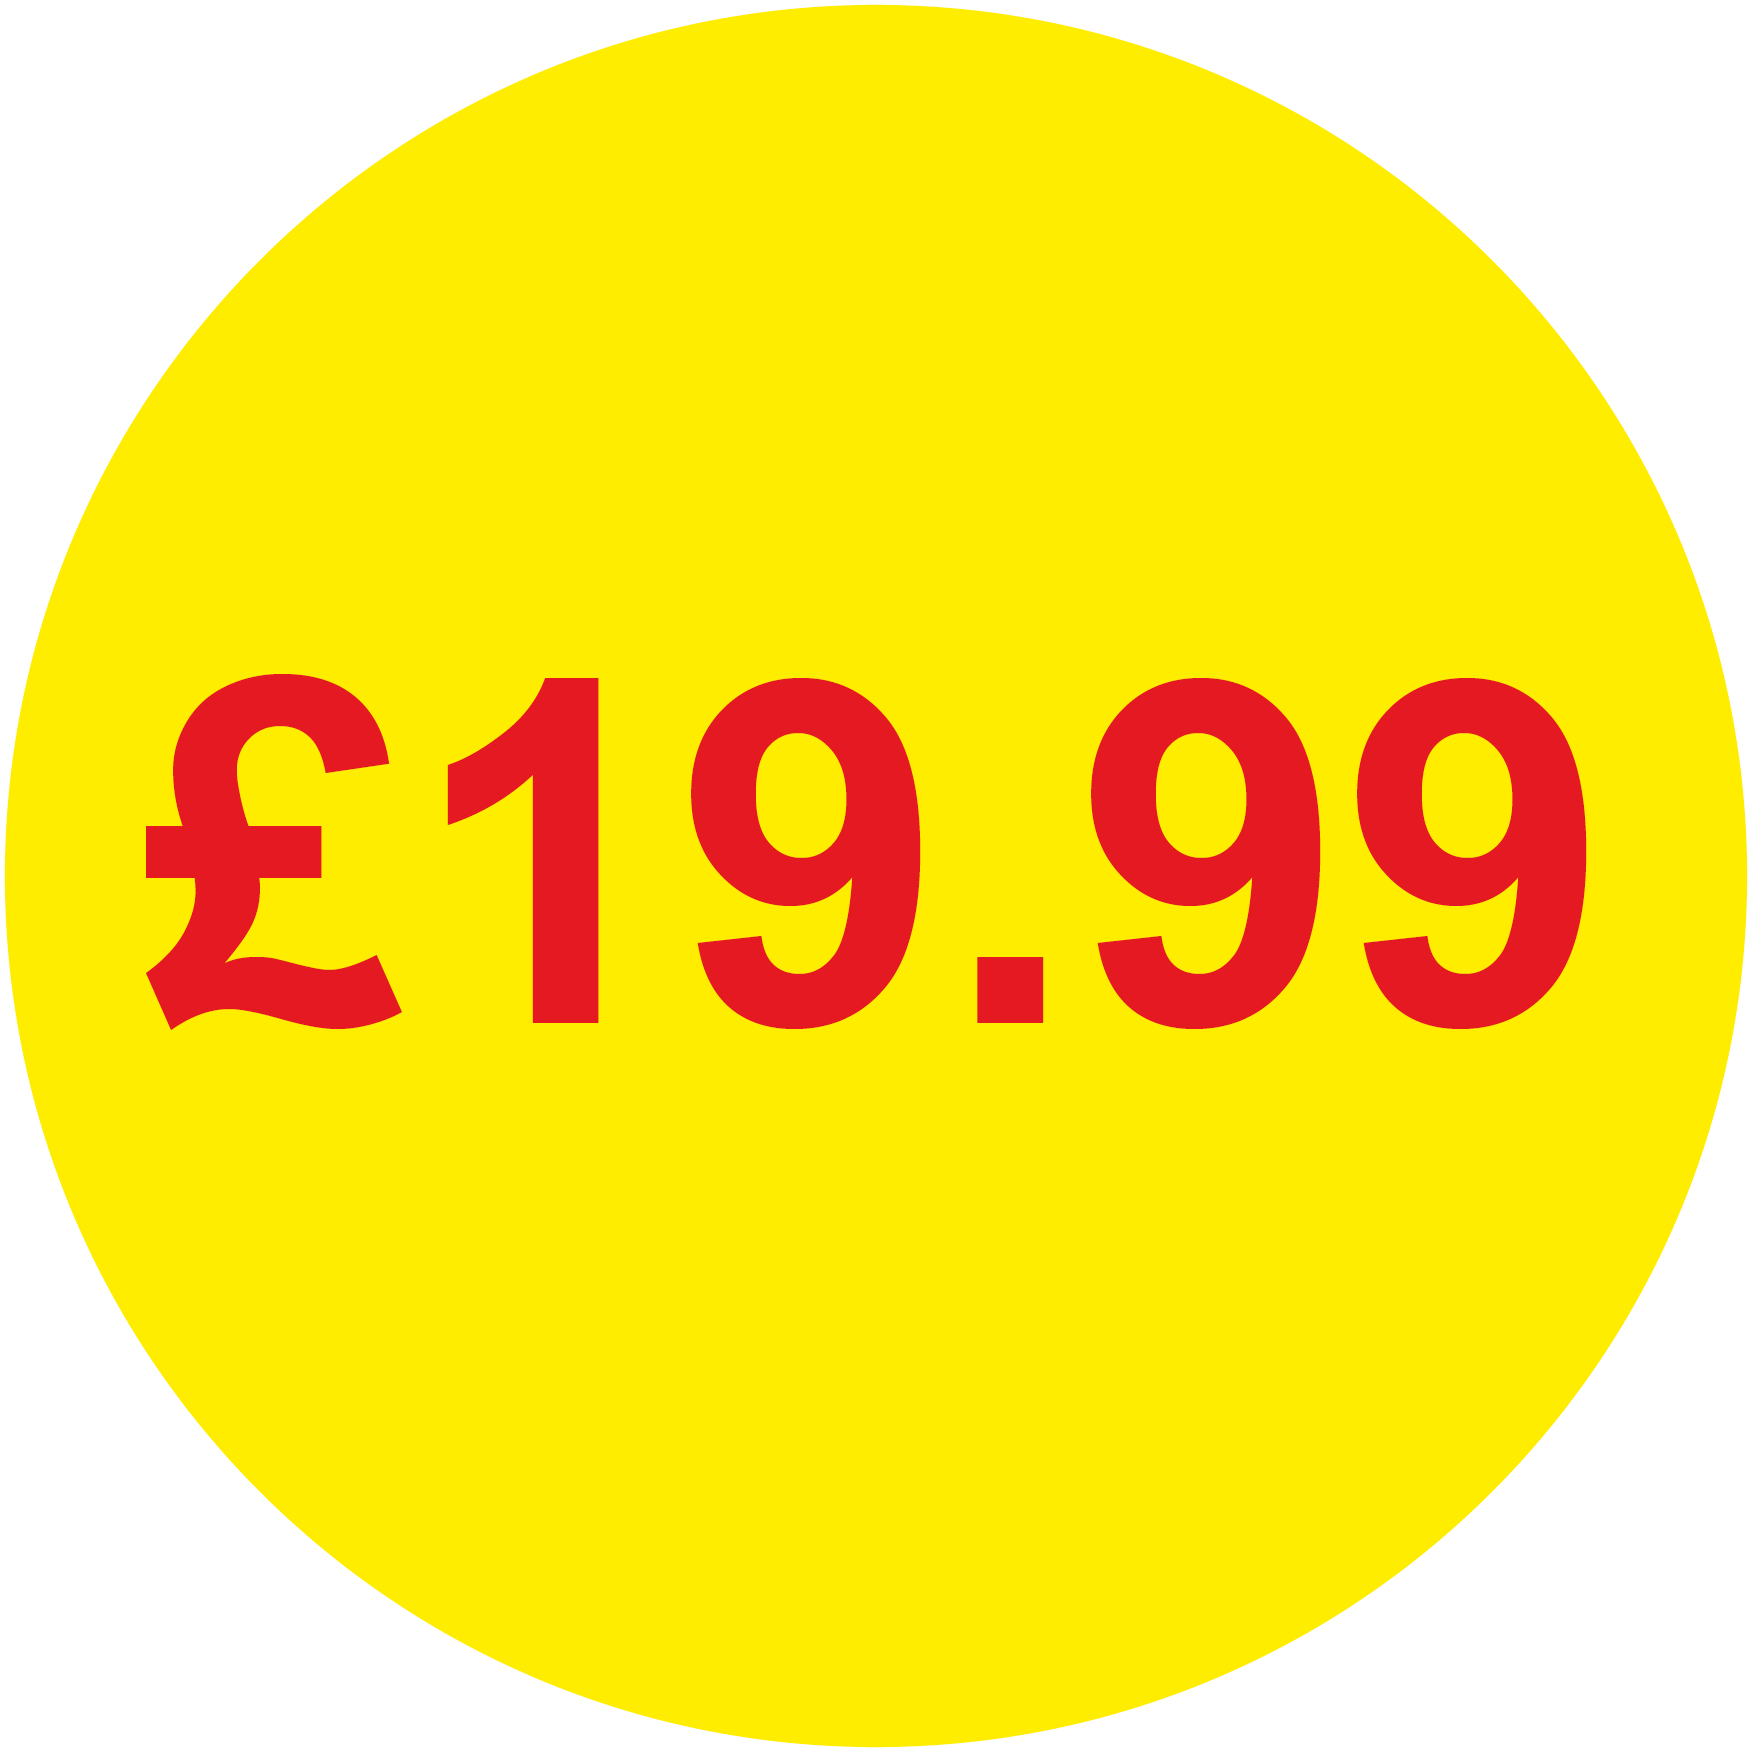 Yellow £19.99 Round Price Labels